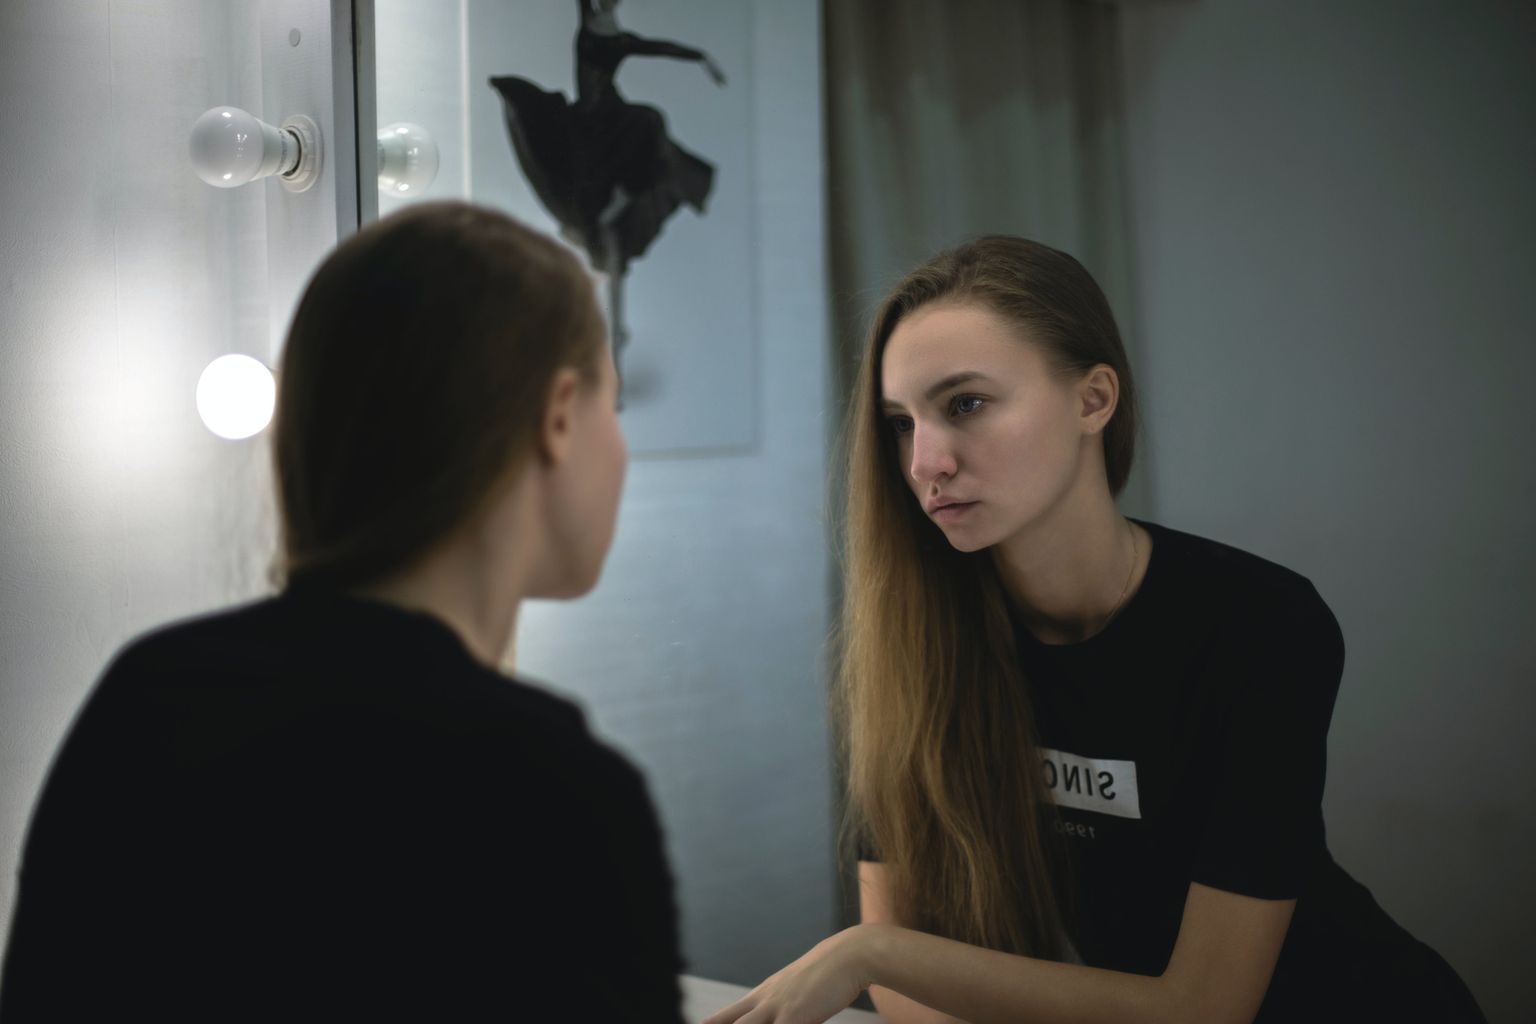 Woman in Black Shirt Facing Mirror